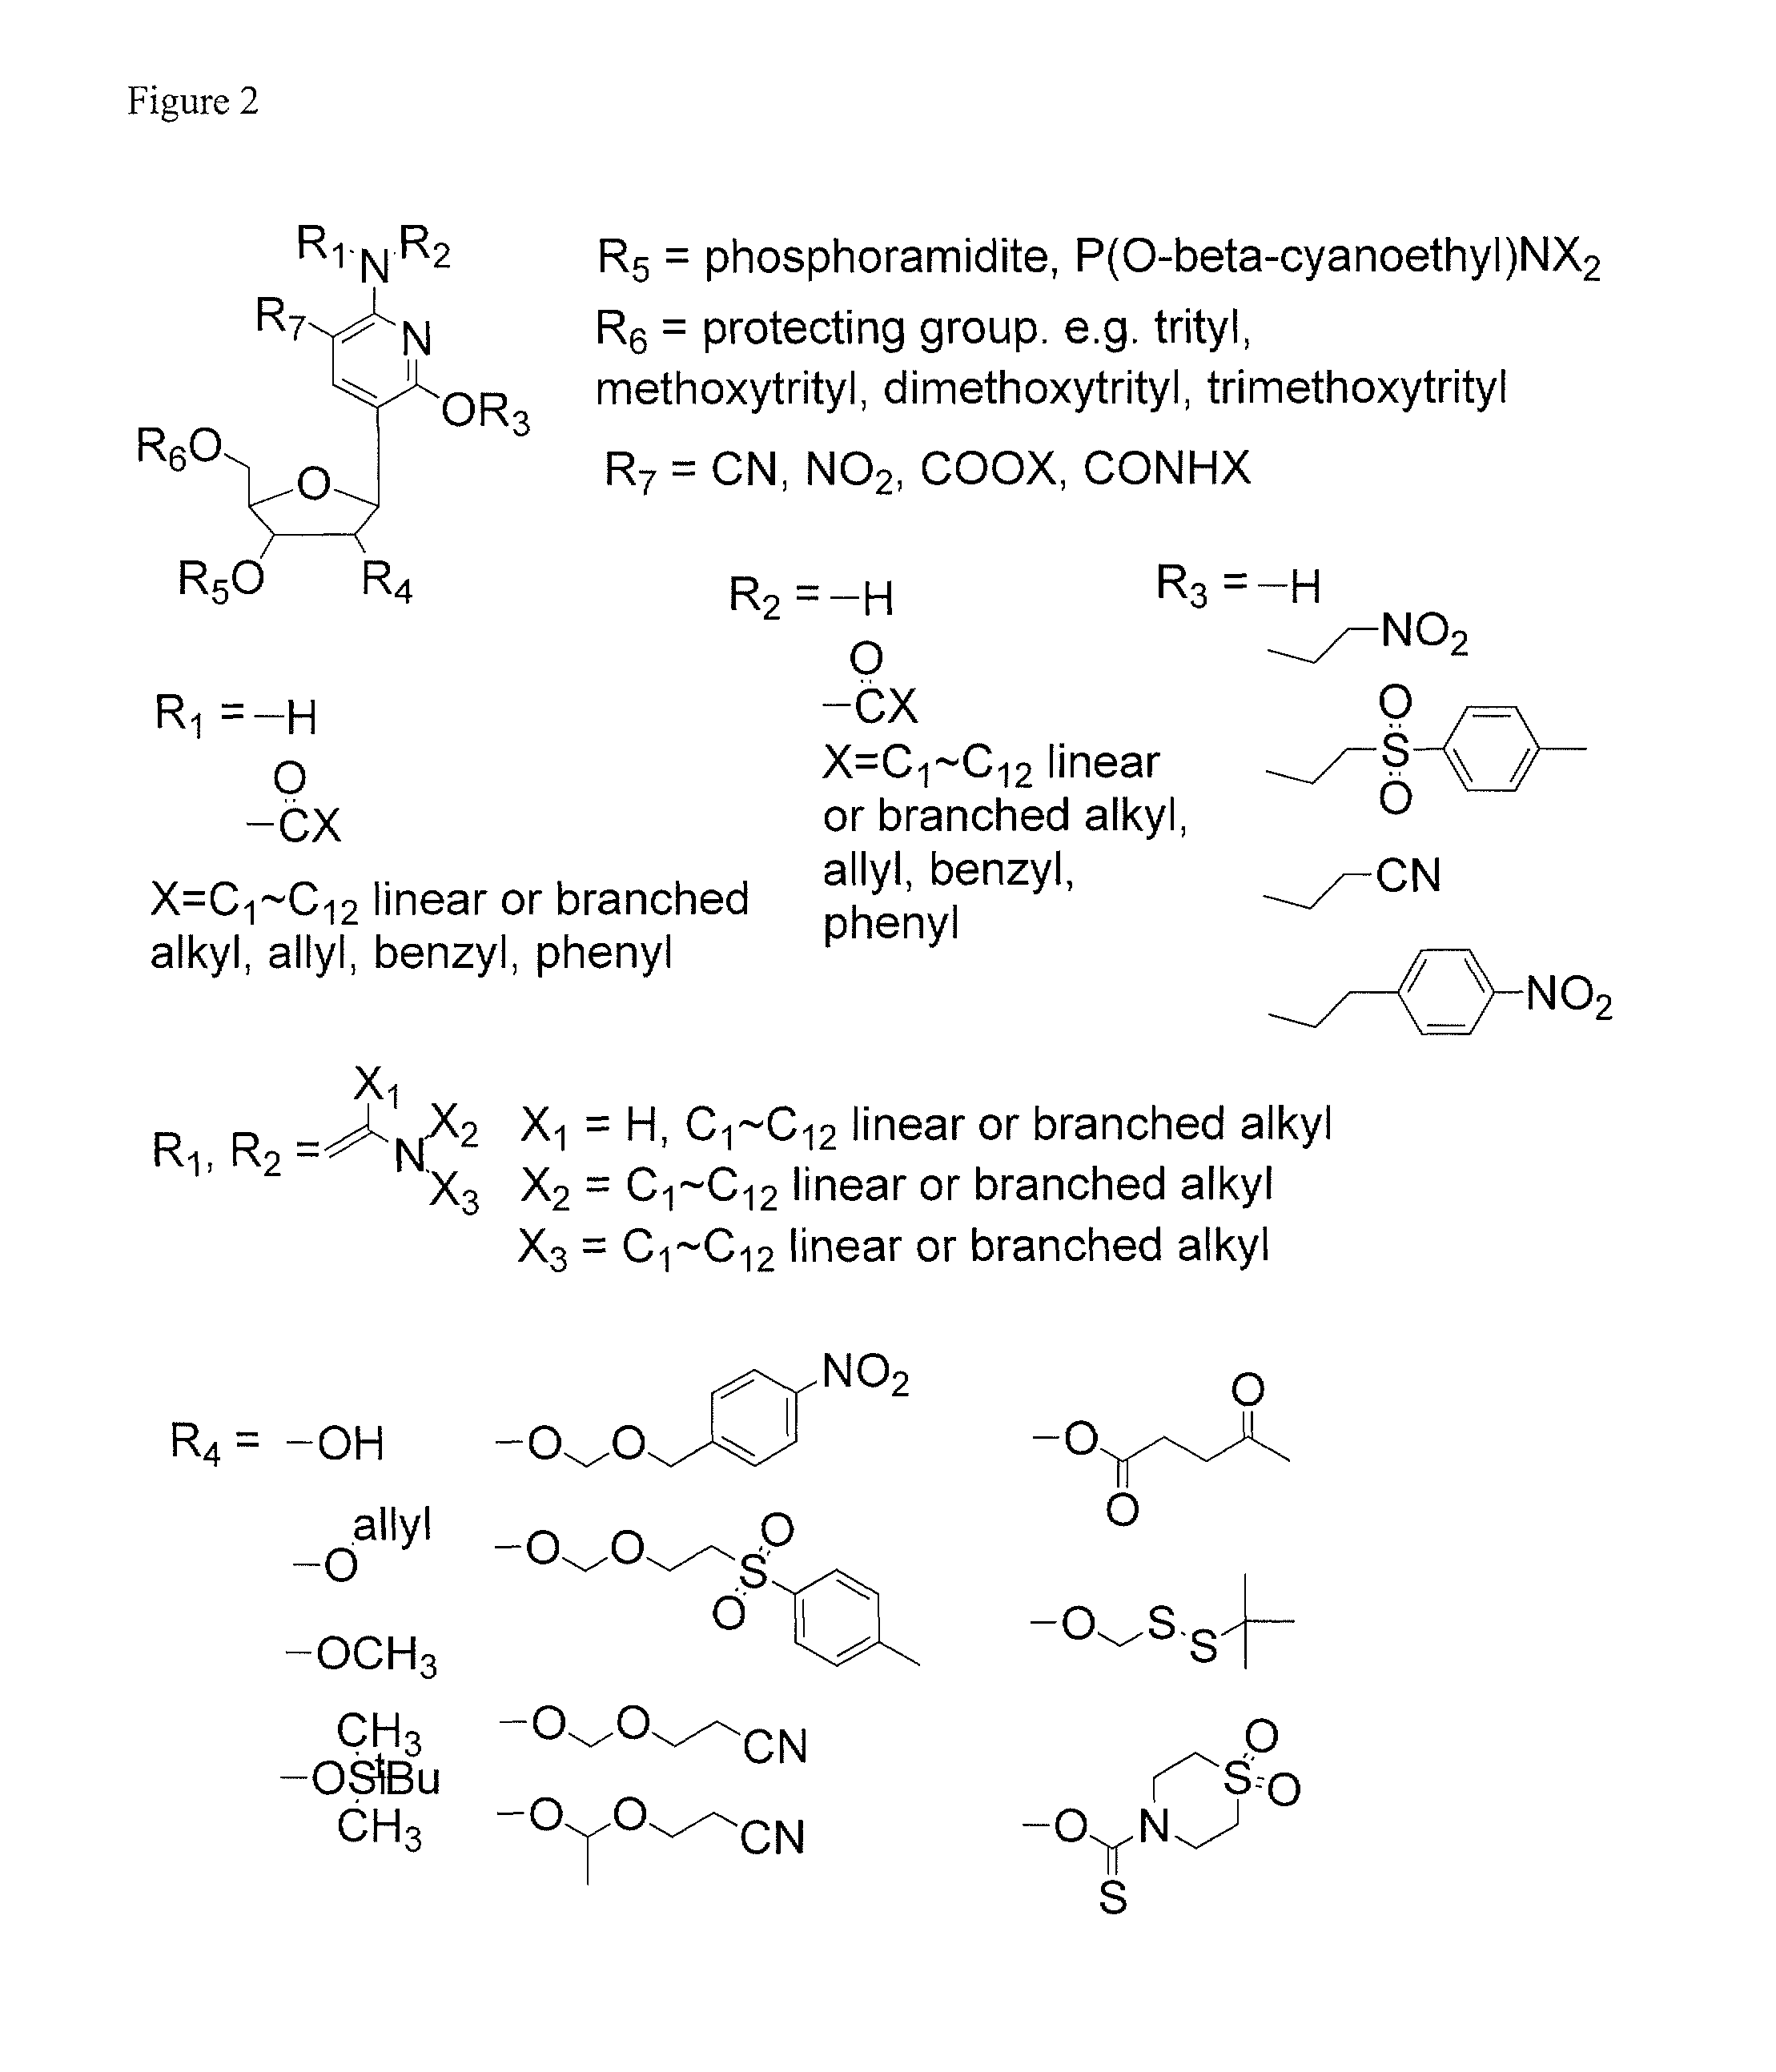 Ribonucleoside analogs with novel hydrogen bonding patterns